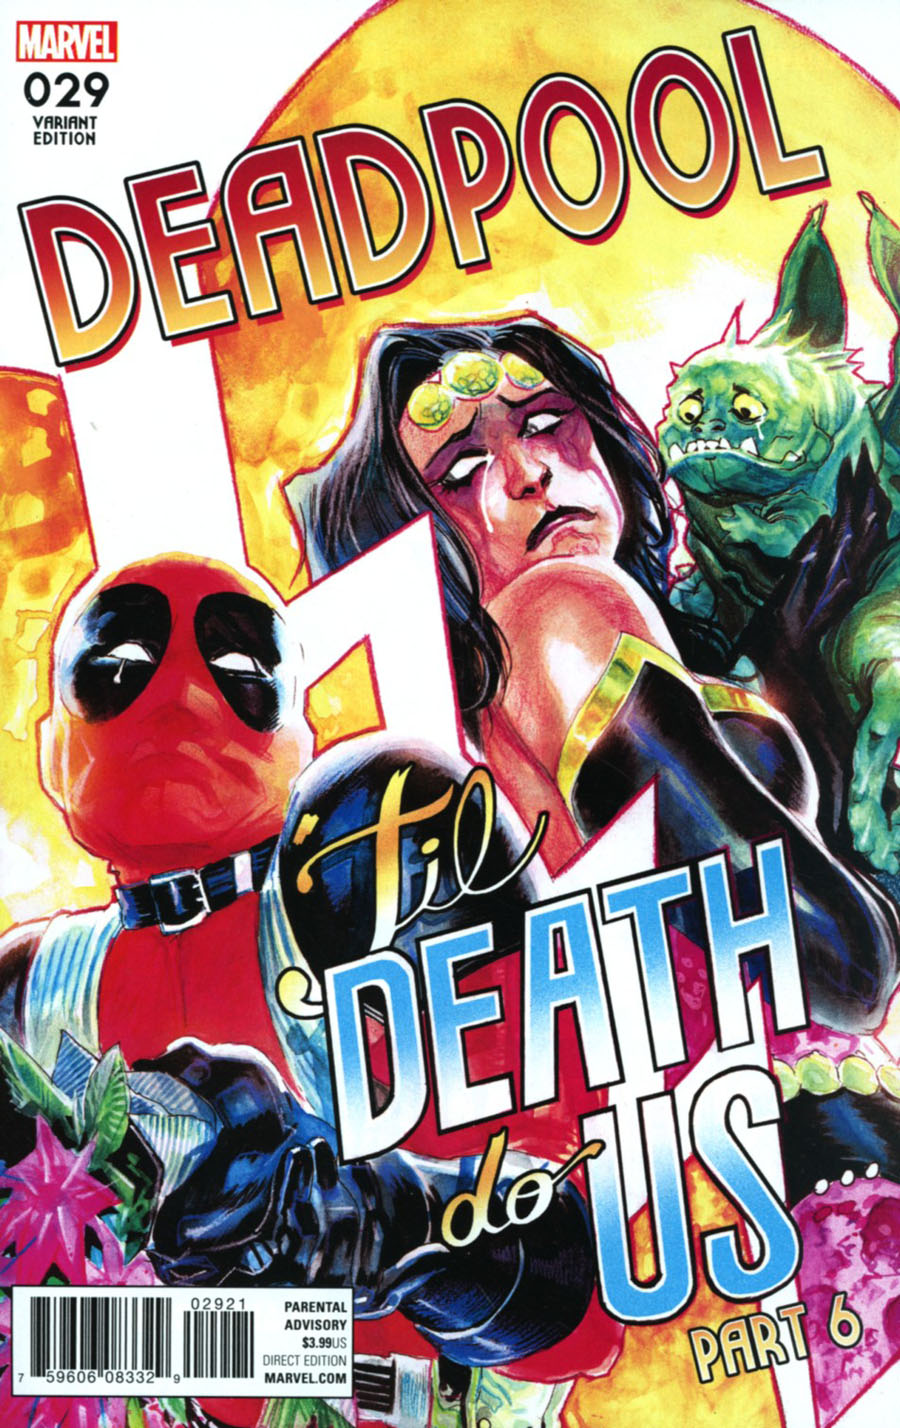 Deadpool Vol 5 #29 Cover B Variant Rafael Albequerque Poster Cover (Til Death Do Us Part 6)